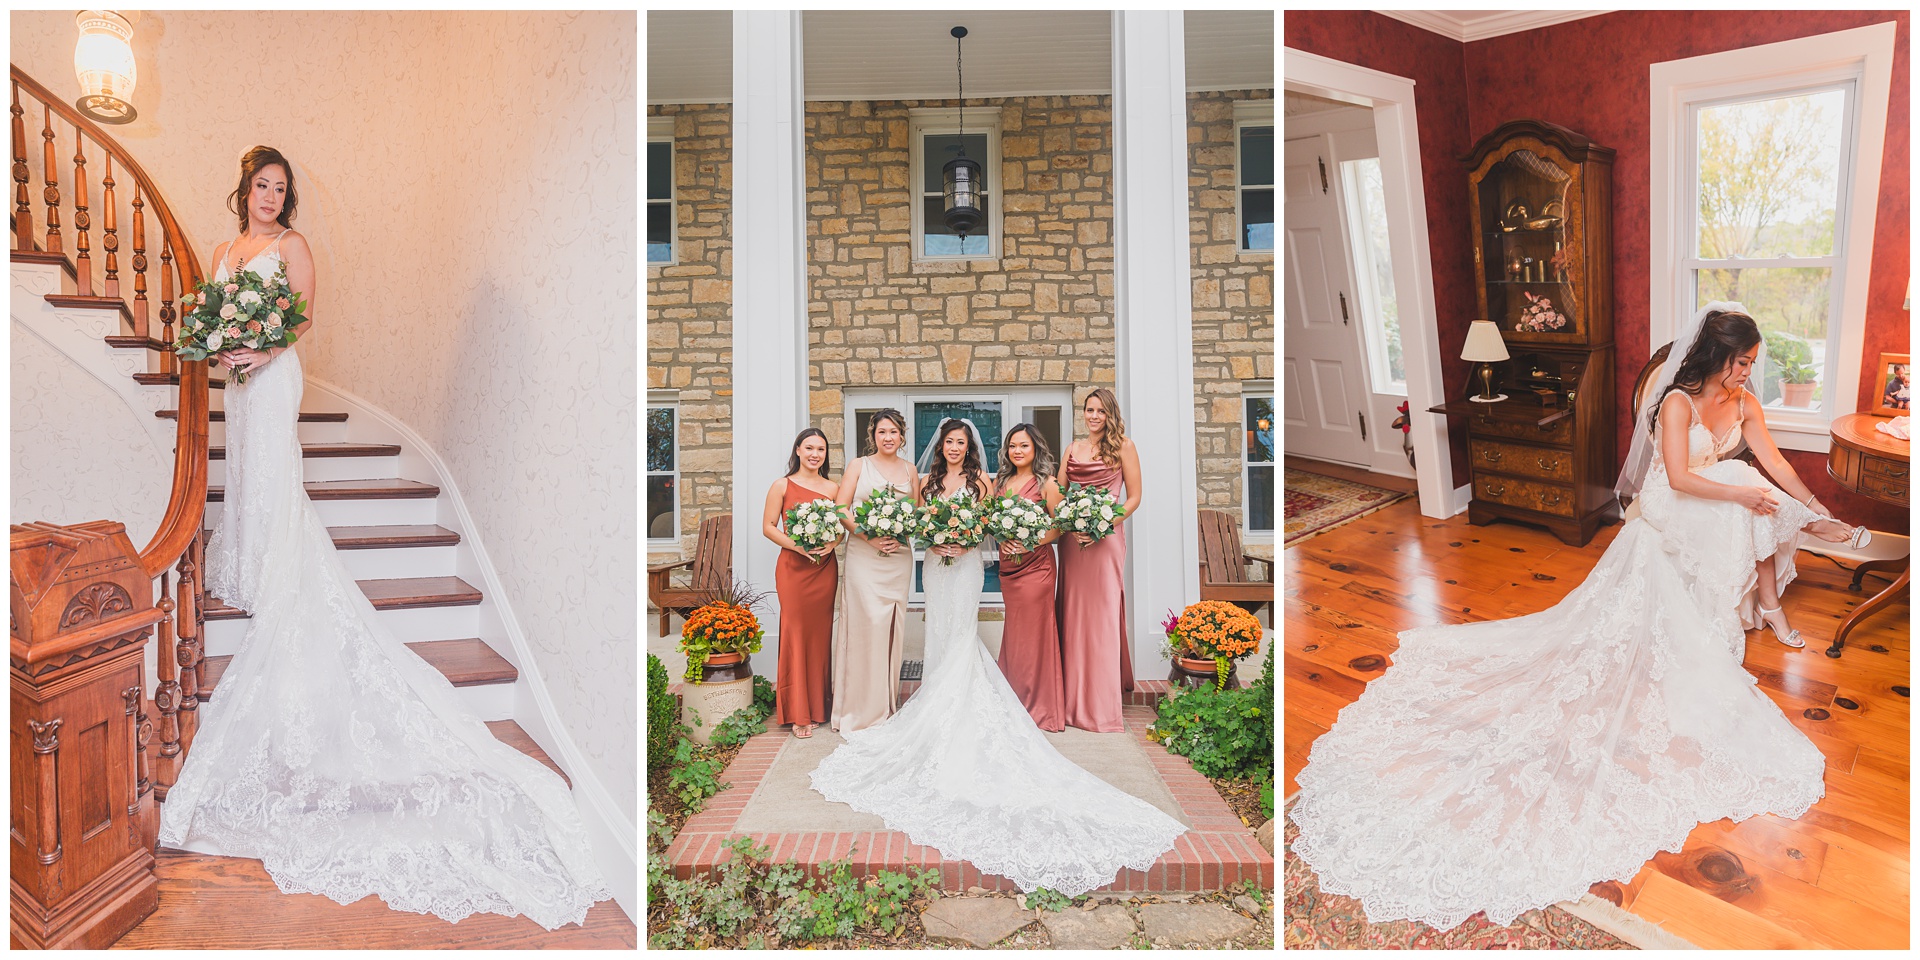 Wedding photography in Eudora, Kansas, by Kansas City wedding photographers Wisdom-Watson Weddings.